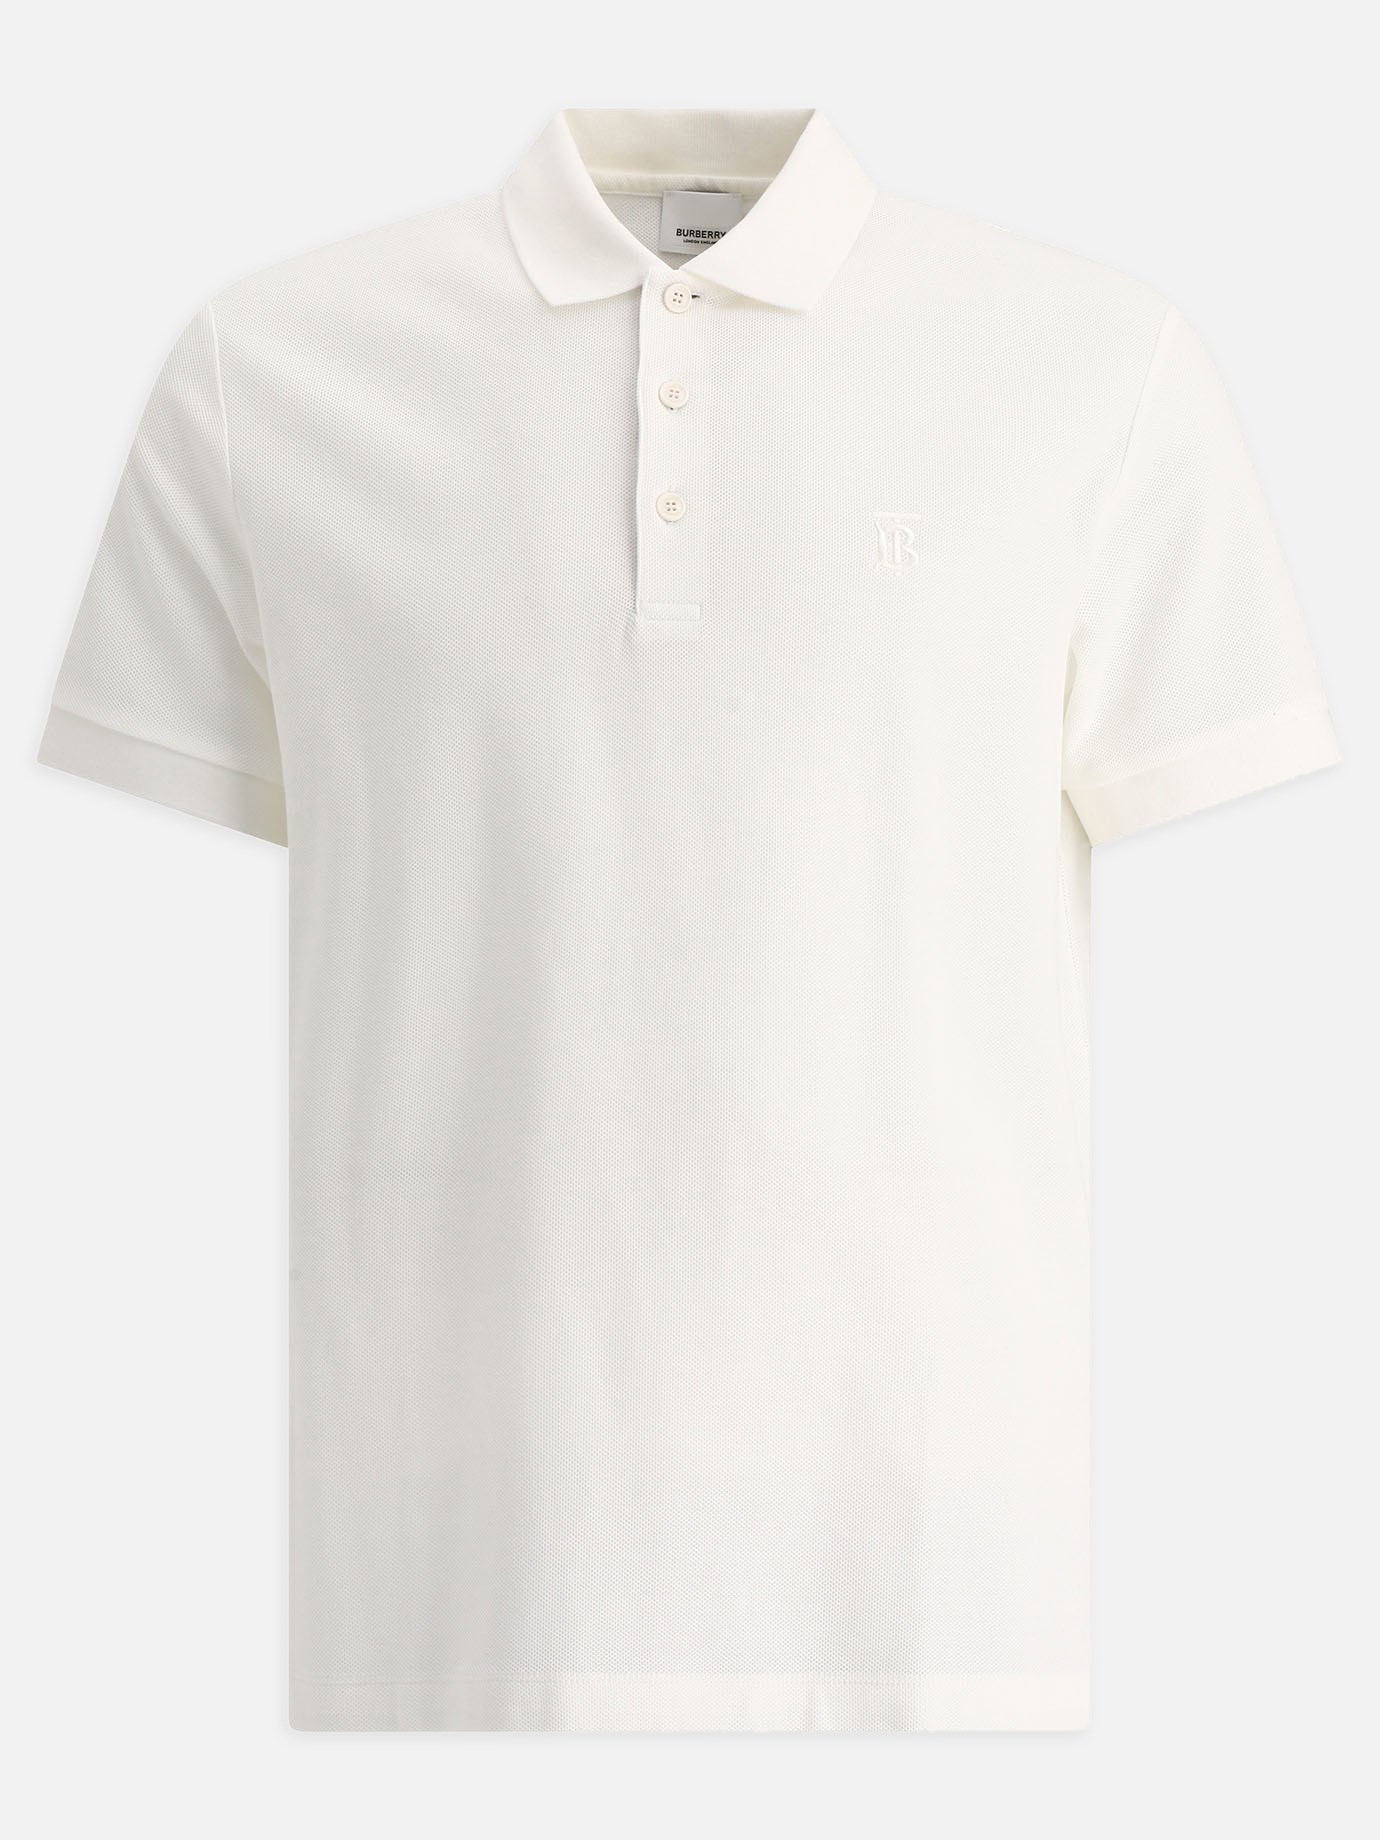 Polo shirt with monogram